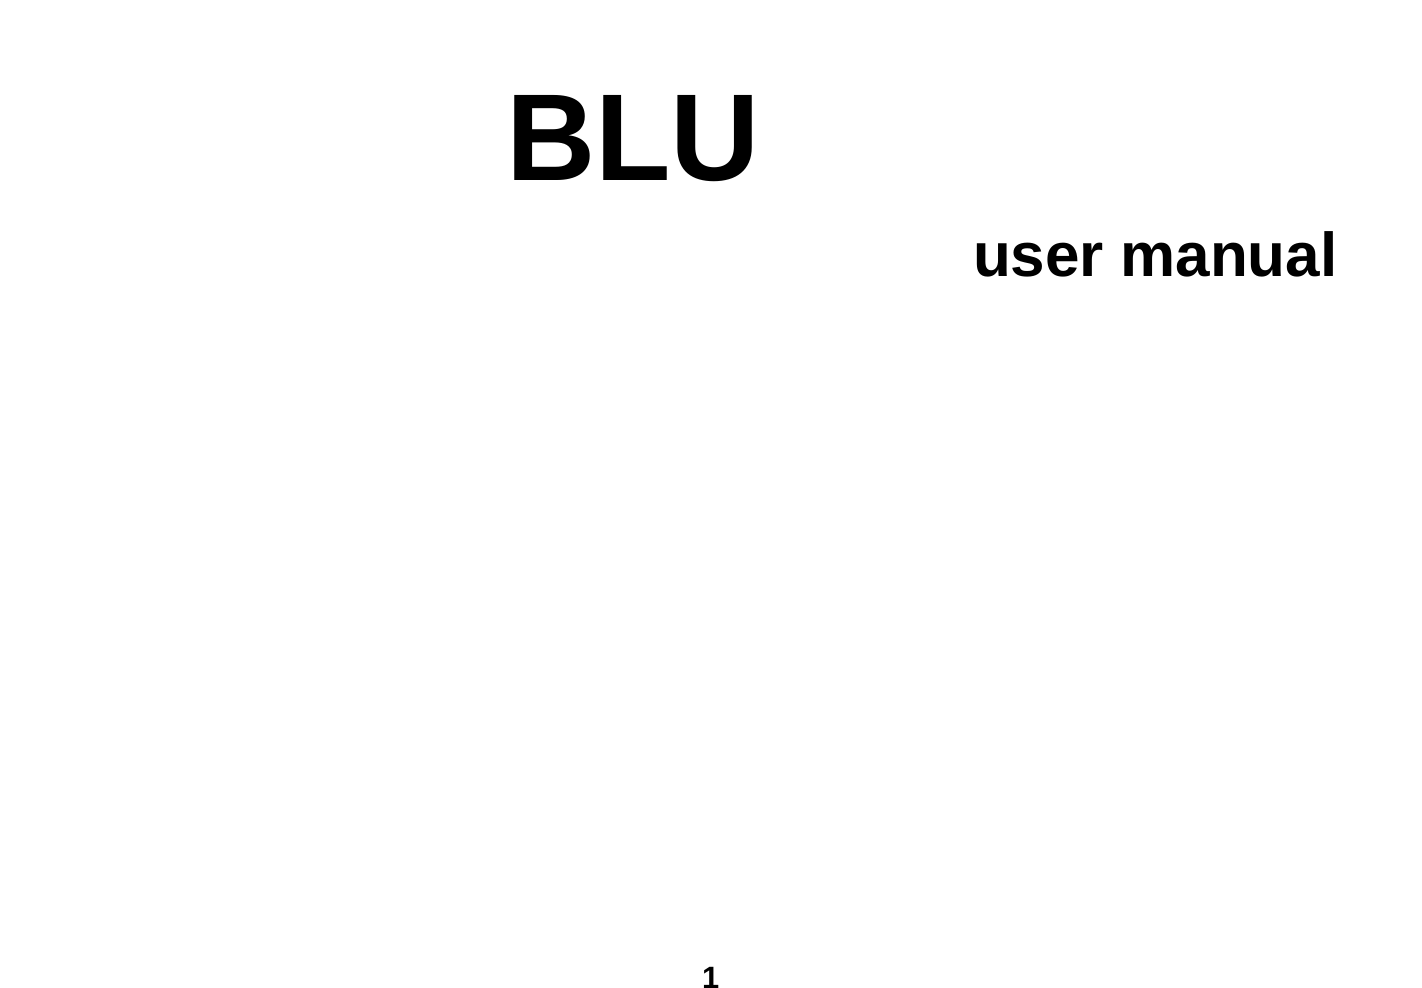  1          BLU                 user manual     